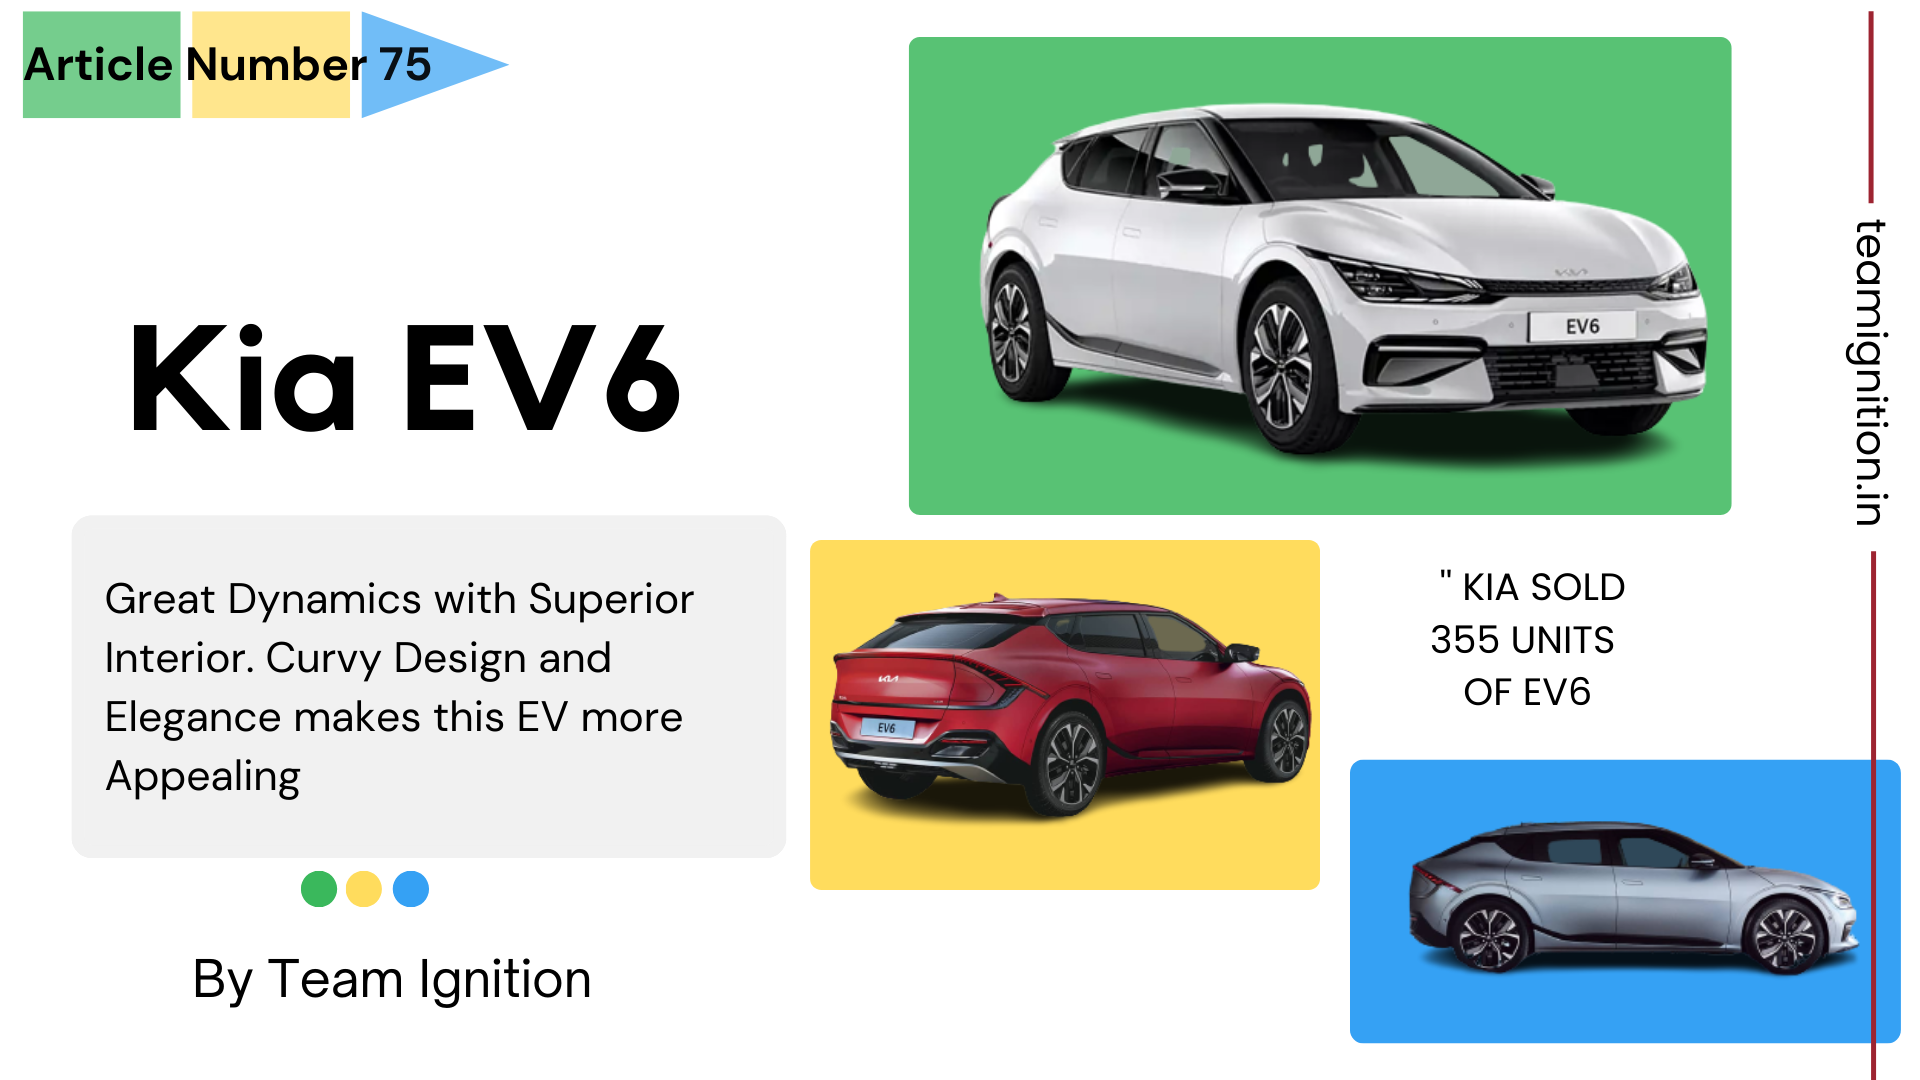 Kia Ev6 – Great Dynamics and Superior Interior